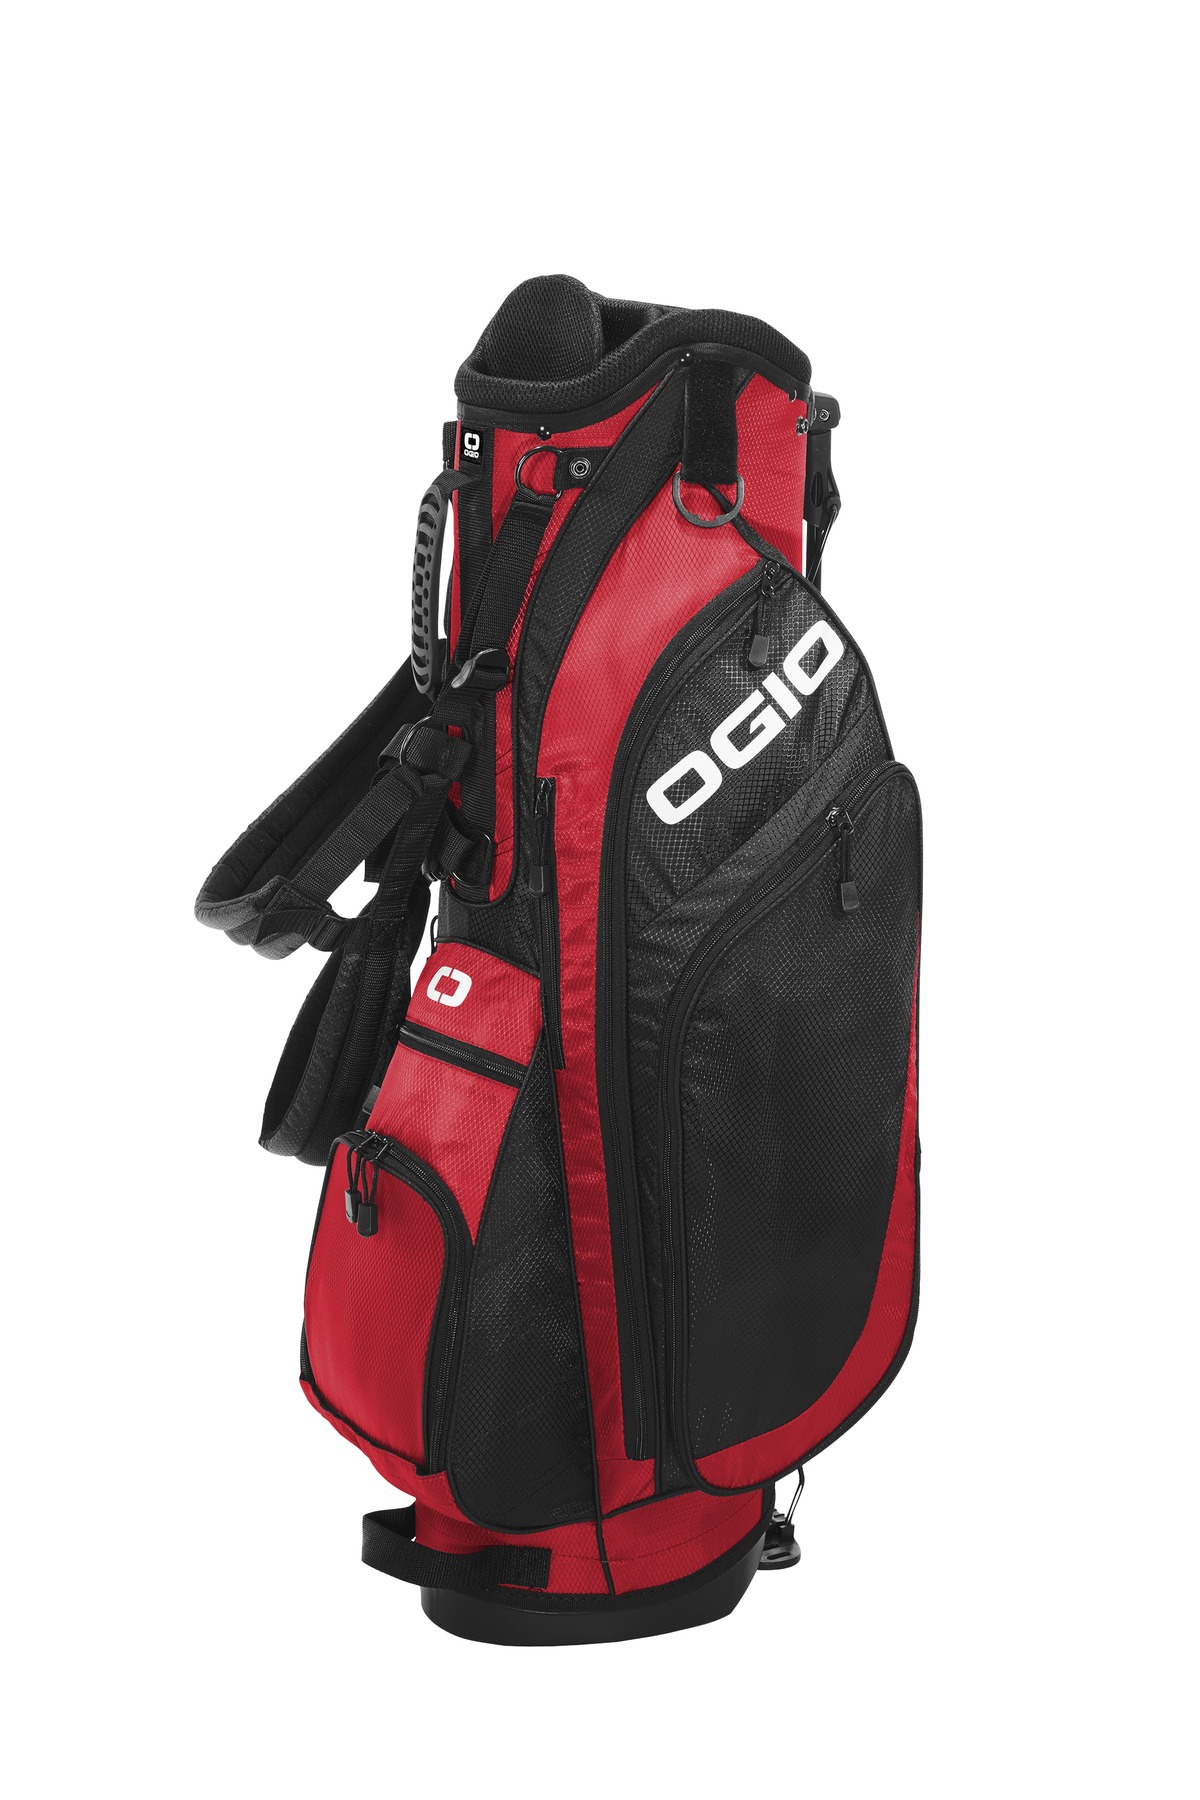 Ogio vision 2.0 golf bag 425044